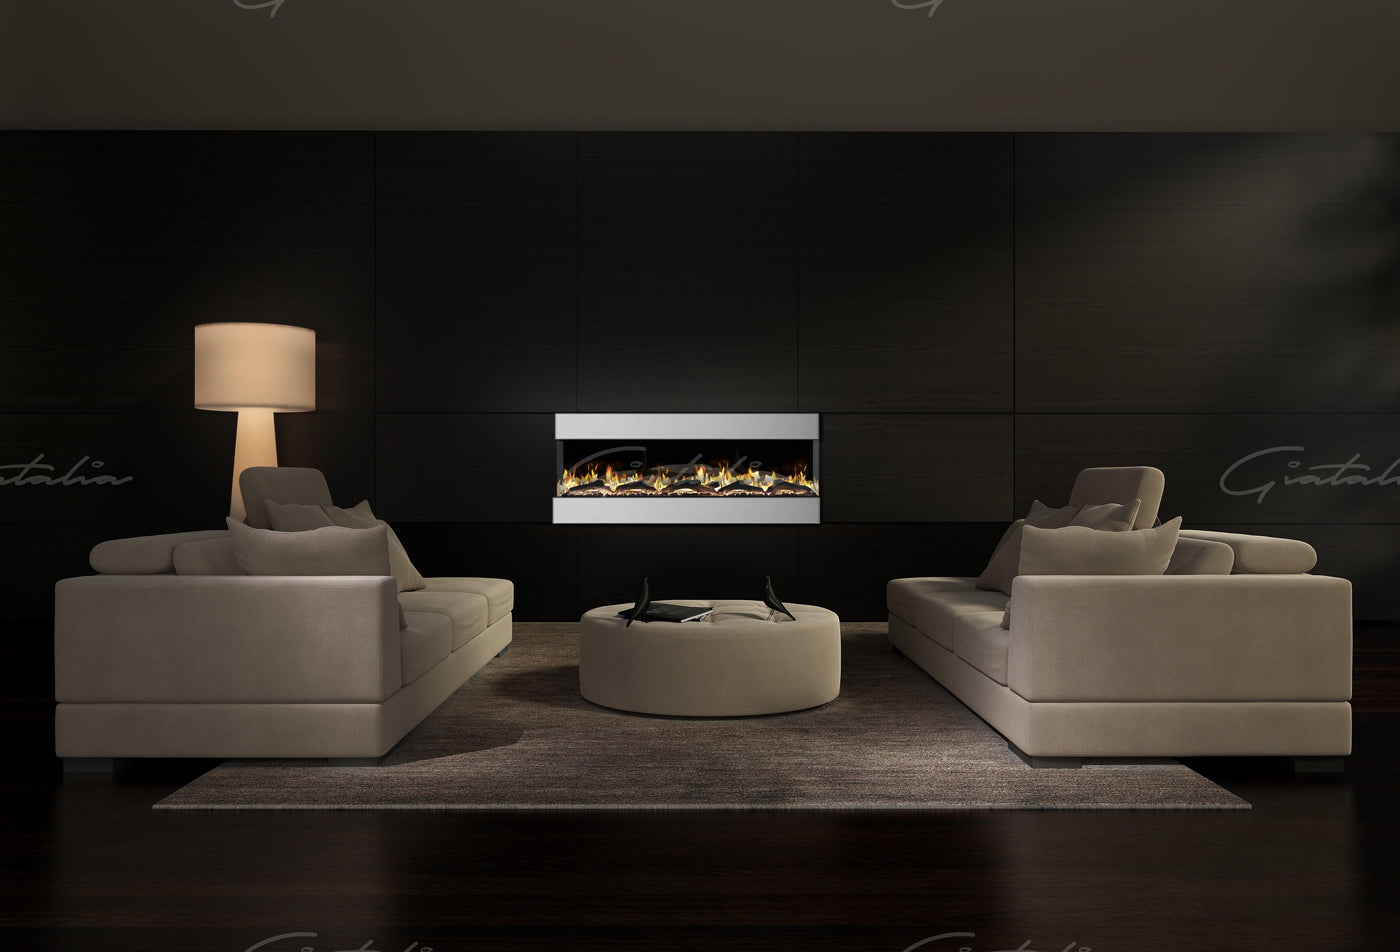 Mirage Panoramic Electric Media Wall HD LED Mantel Inset Fire Black - 42"-Esme Furnishings